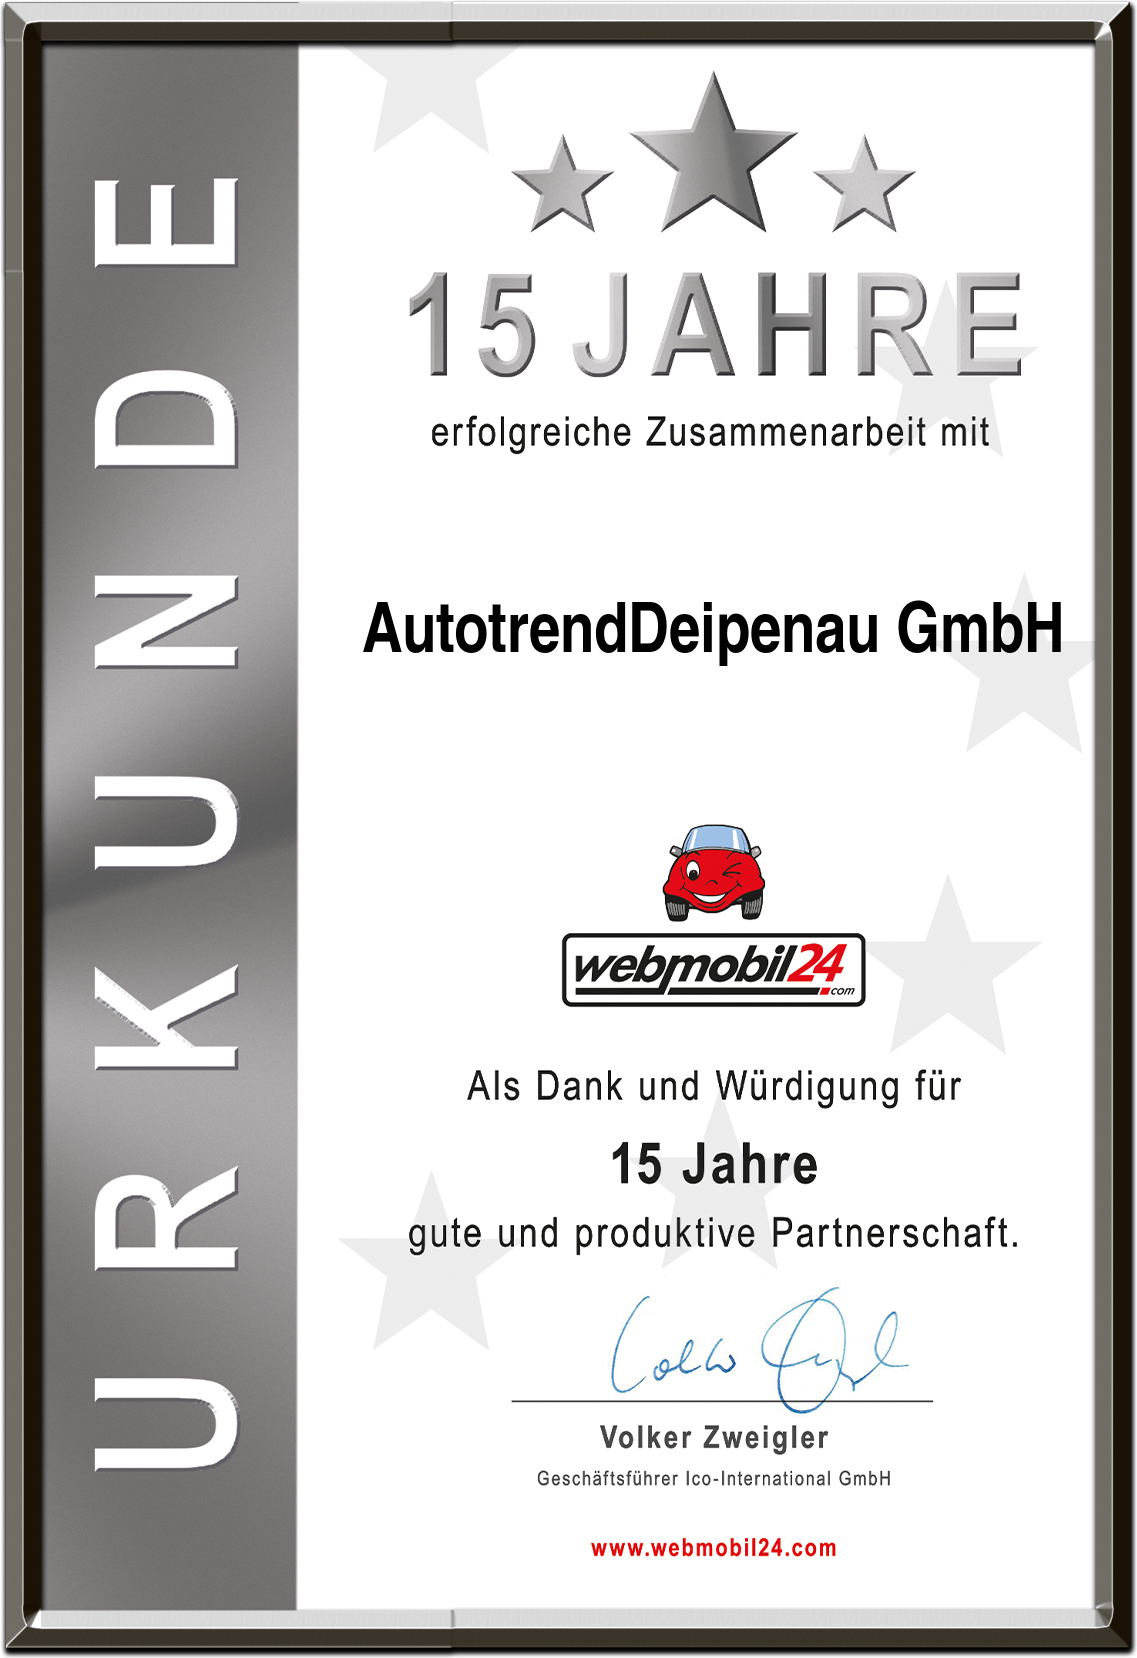 AutotrendDeipenau GmbH